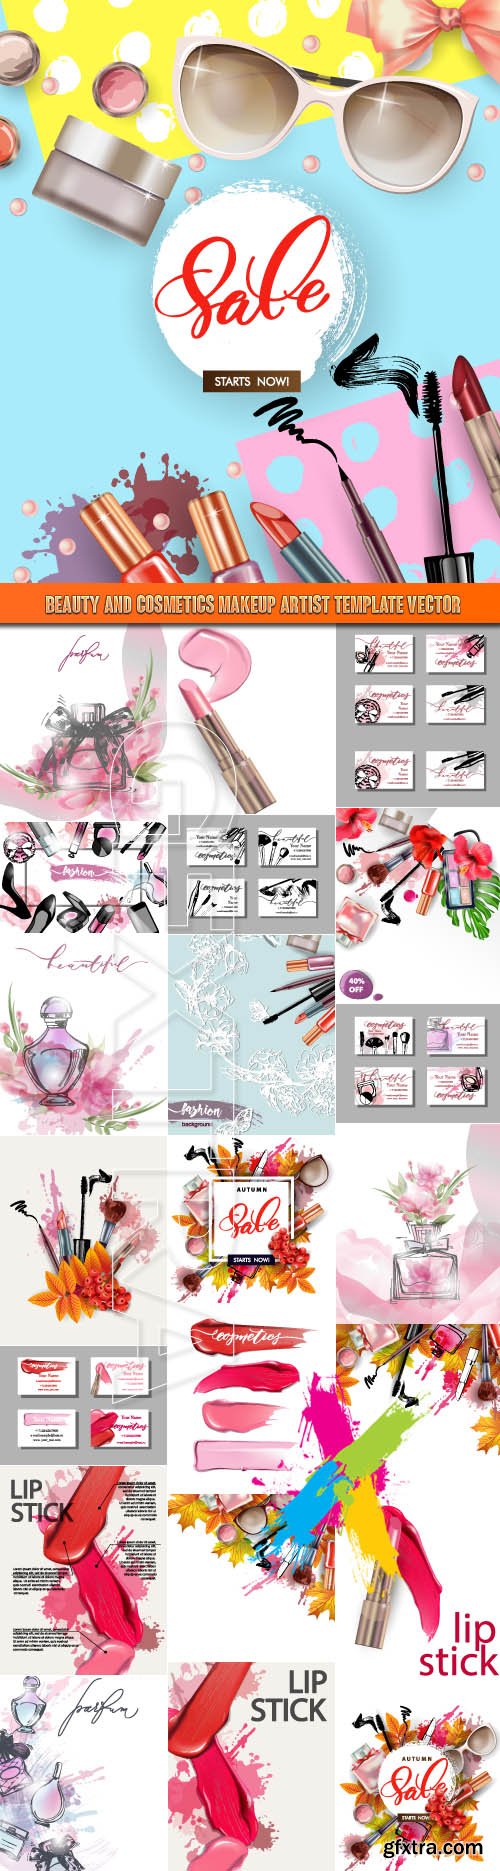 Beauty and cosmetics makeup artist template vector